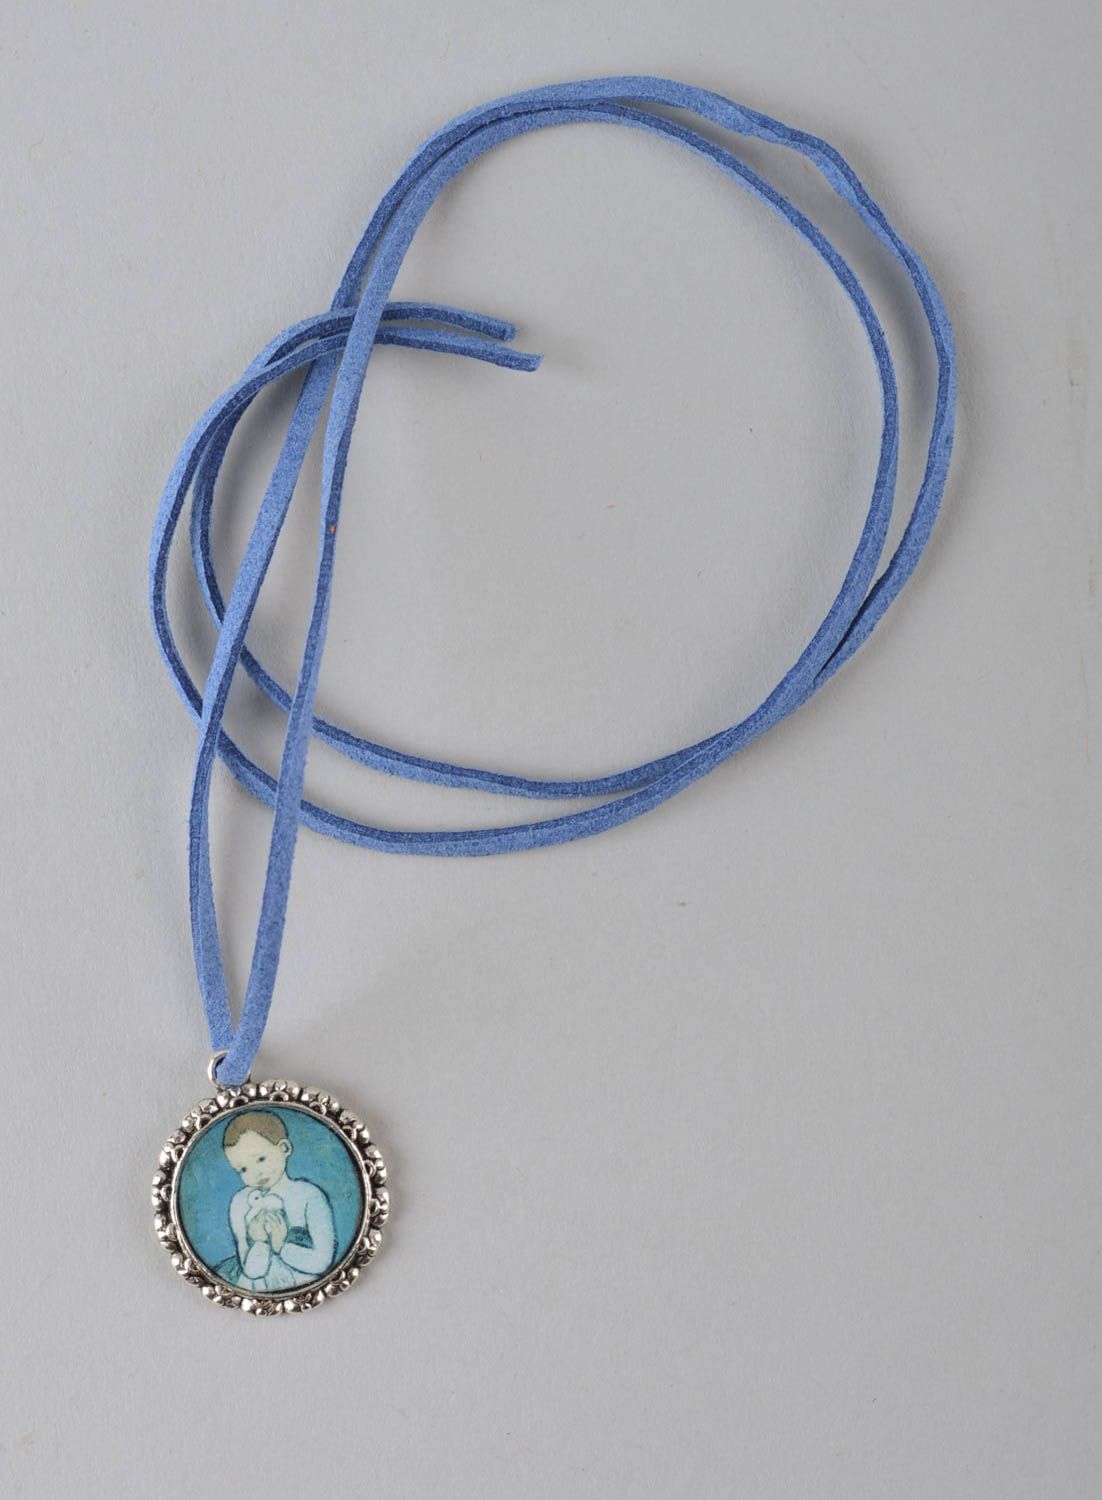 Handmade metal pendant with print designer jewelry pendant on long cord photo 2